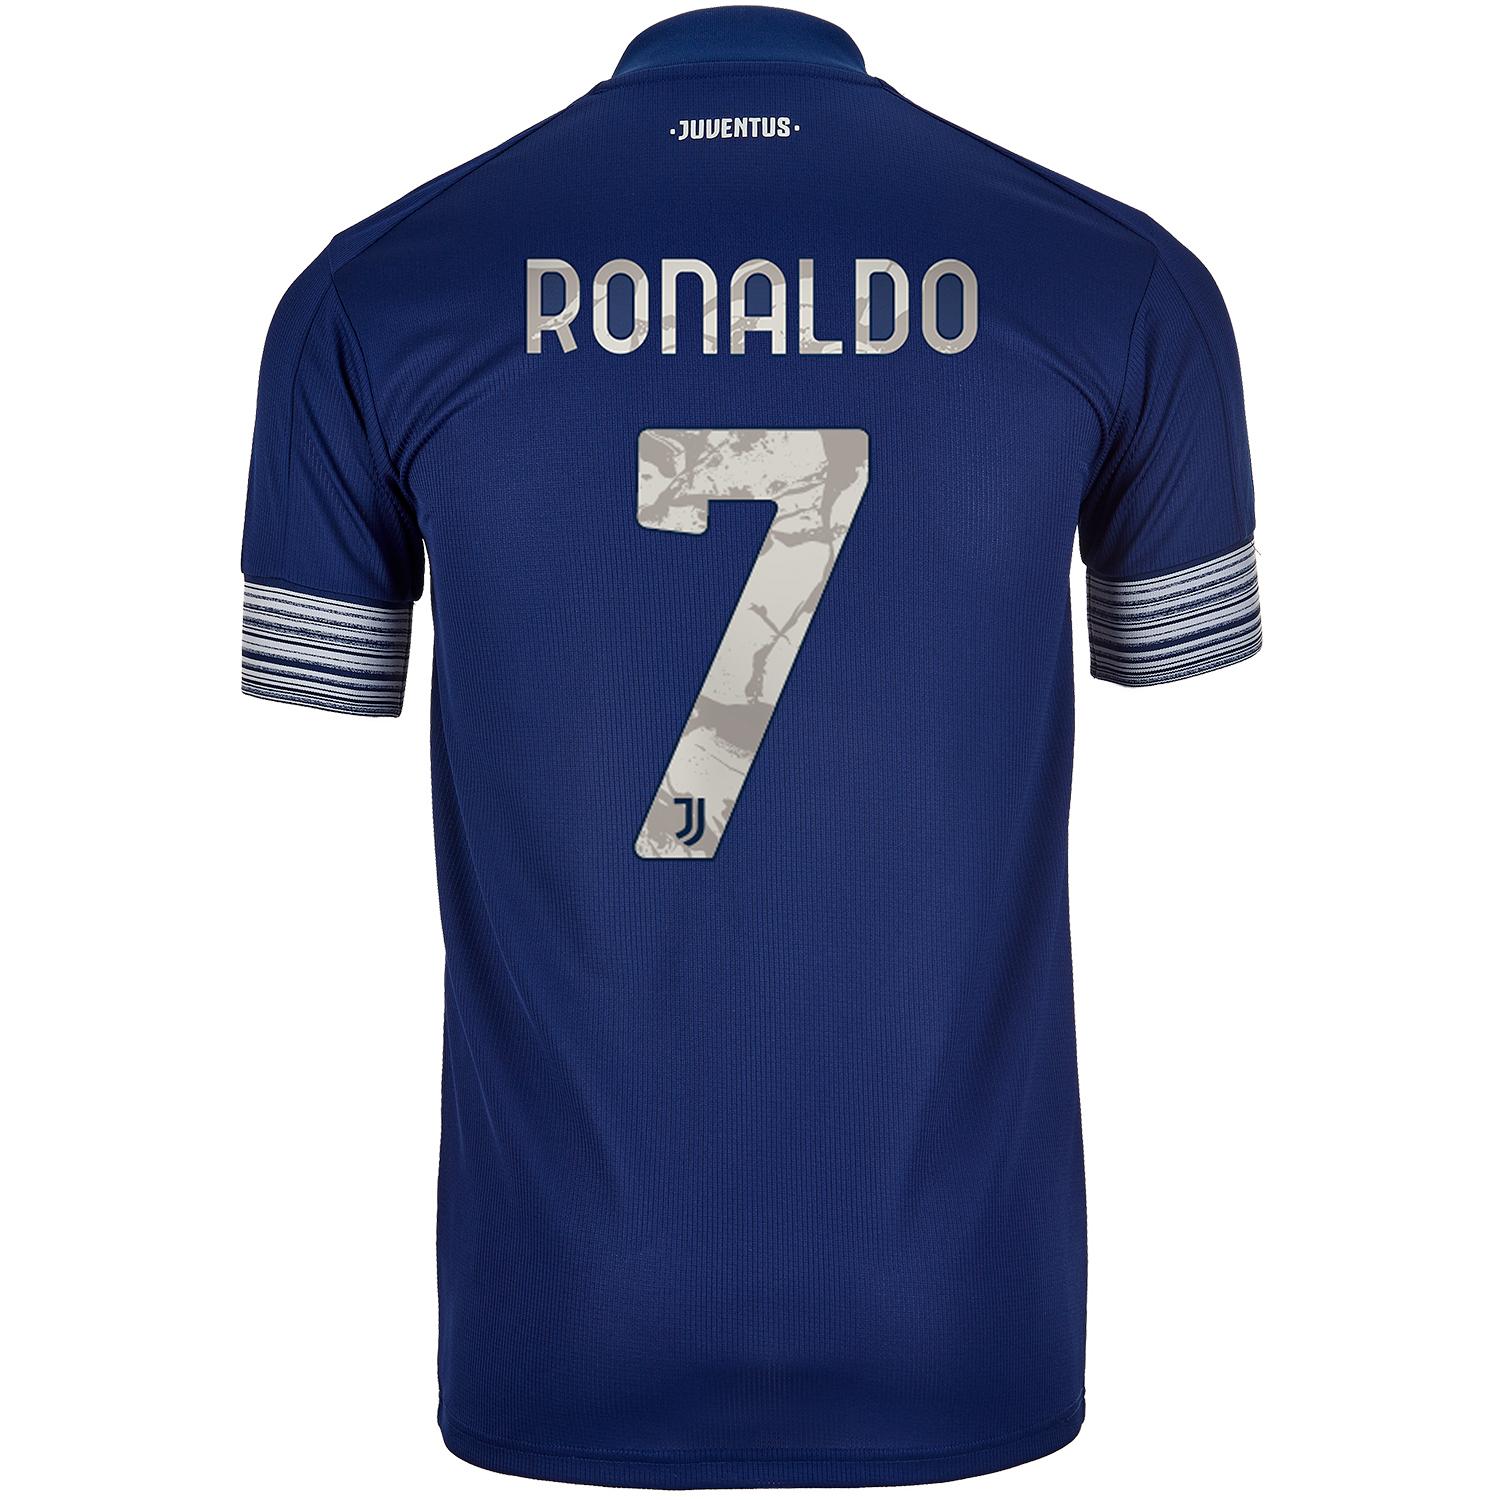 Cristiano Ronaldo Jerseys For Kids - Image to u